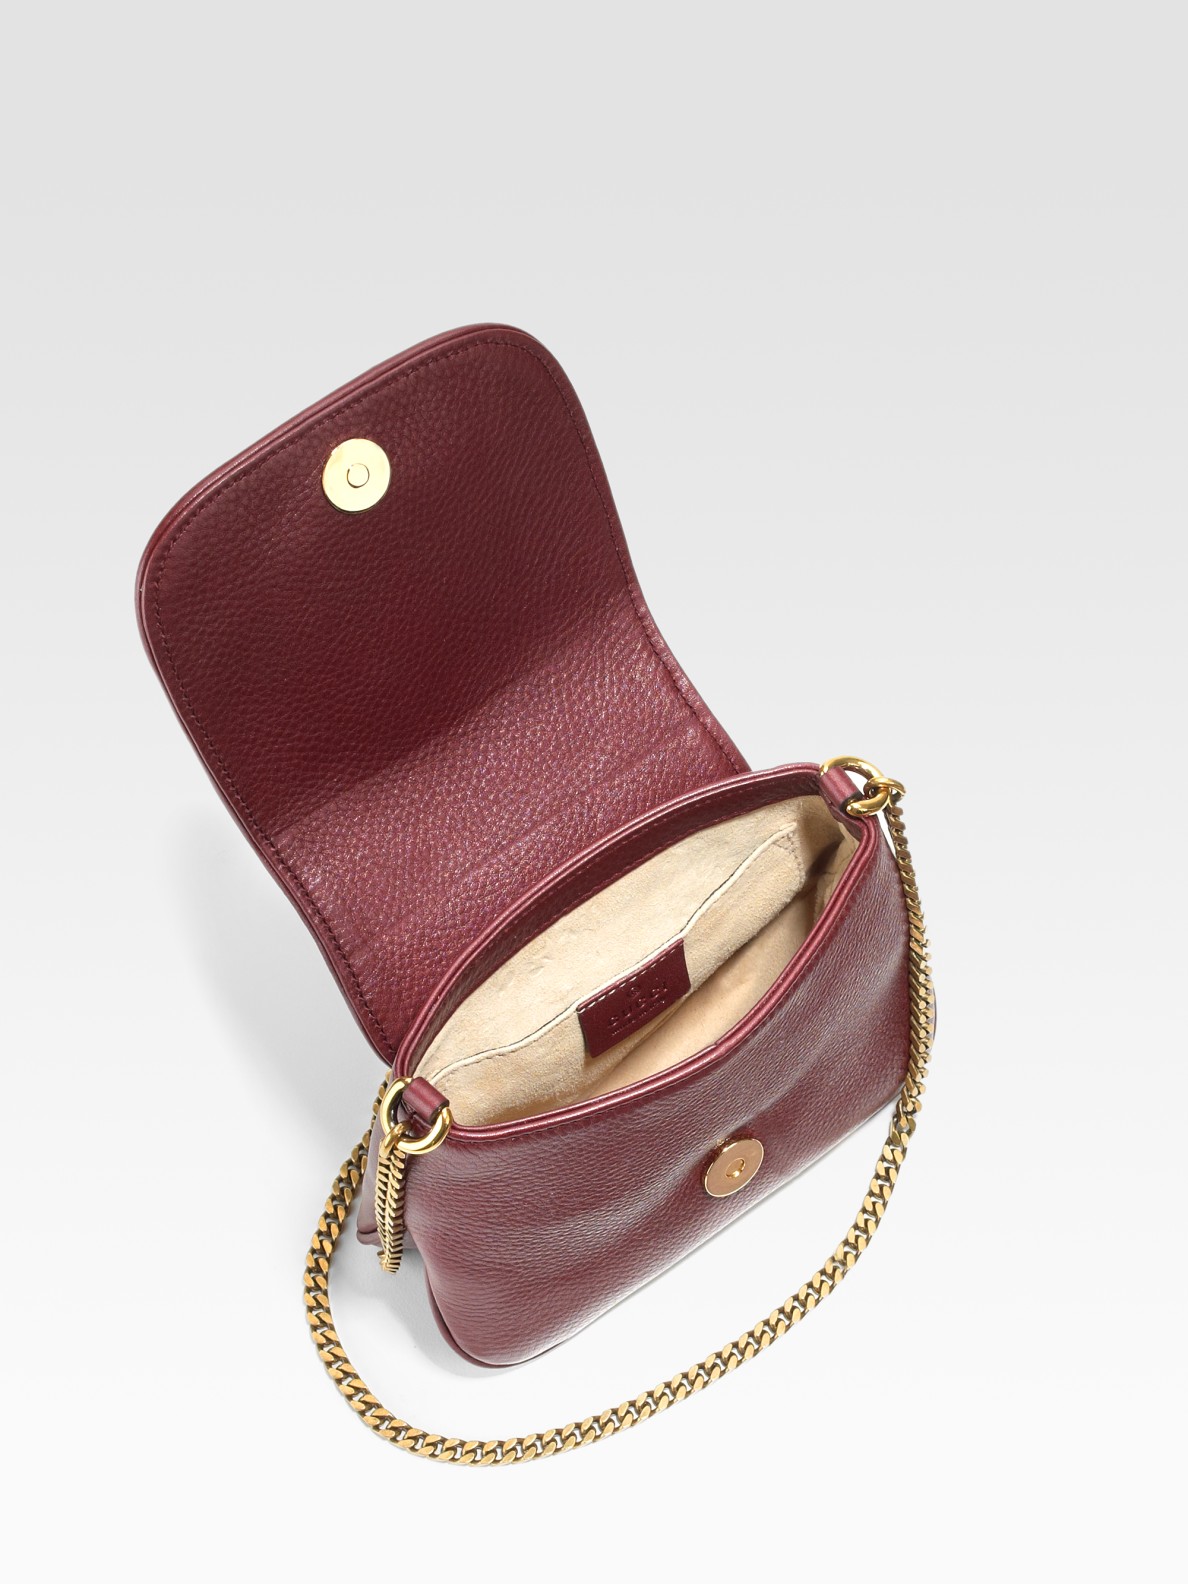 Gucci Gucci Small Metallic Shoulder Bag in Burgundy (Pink) - Lyst